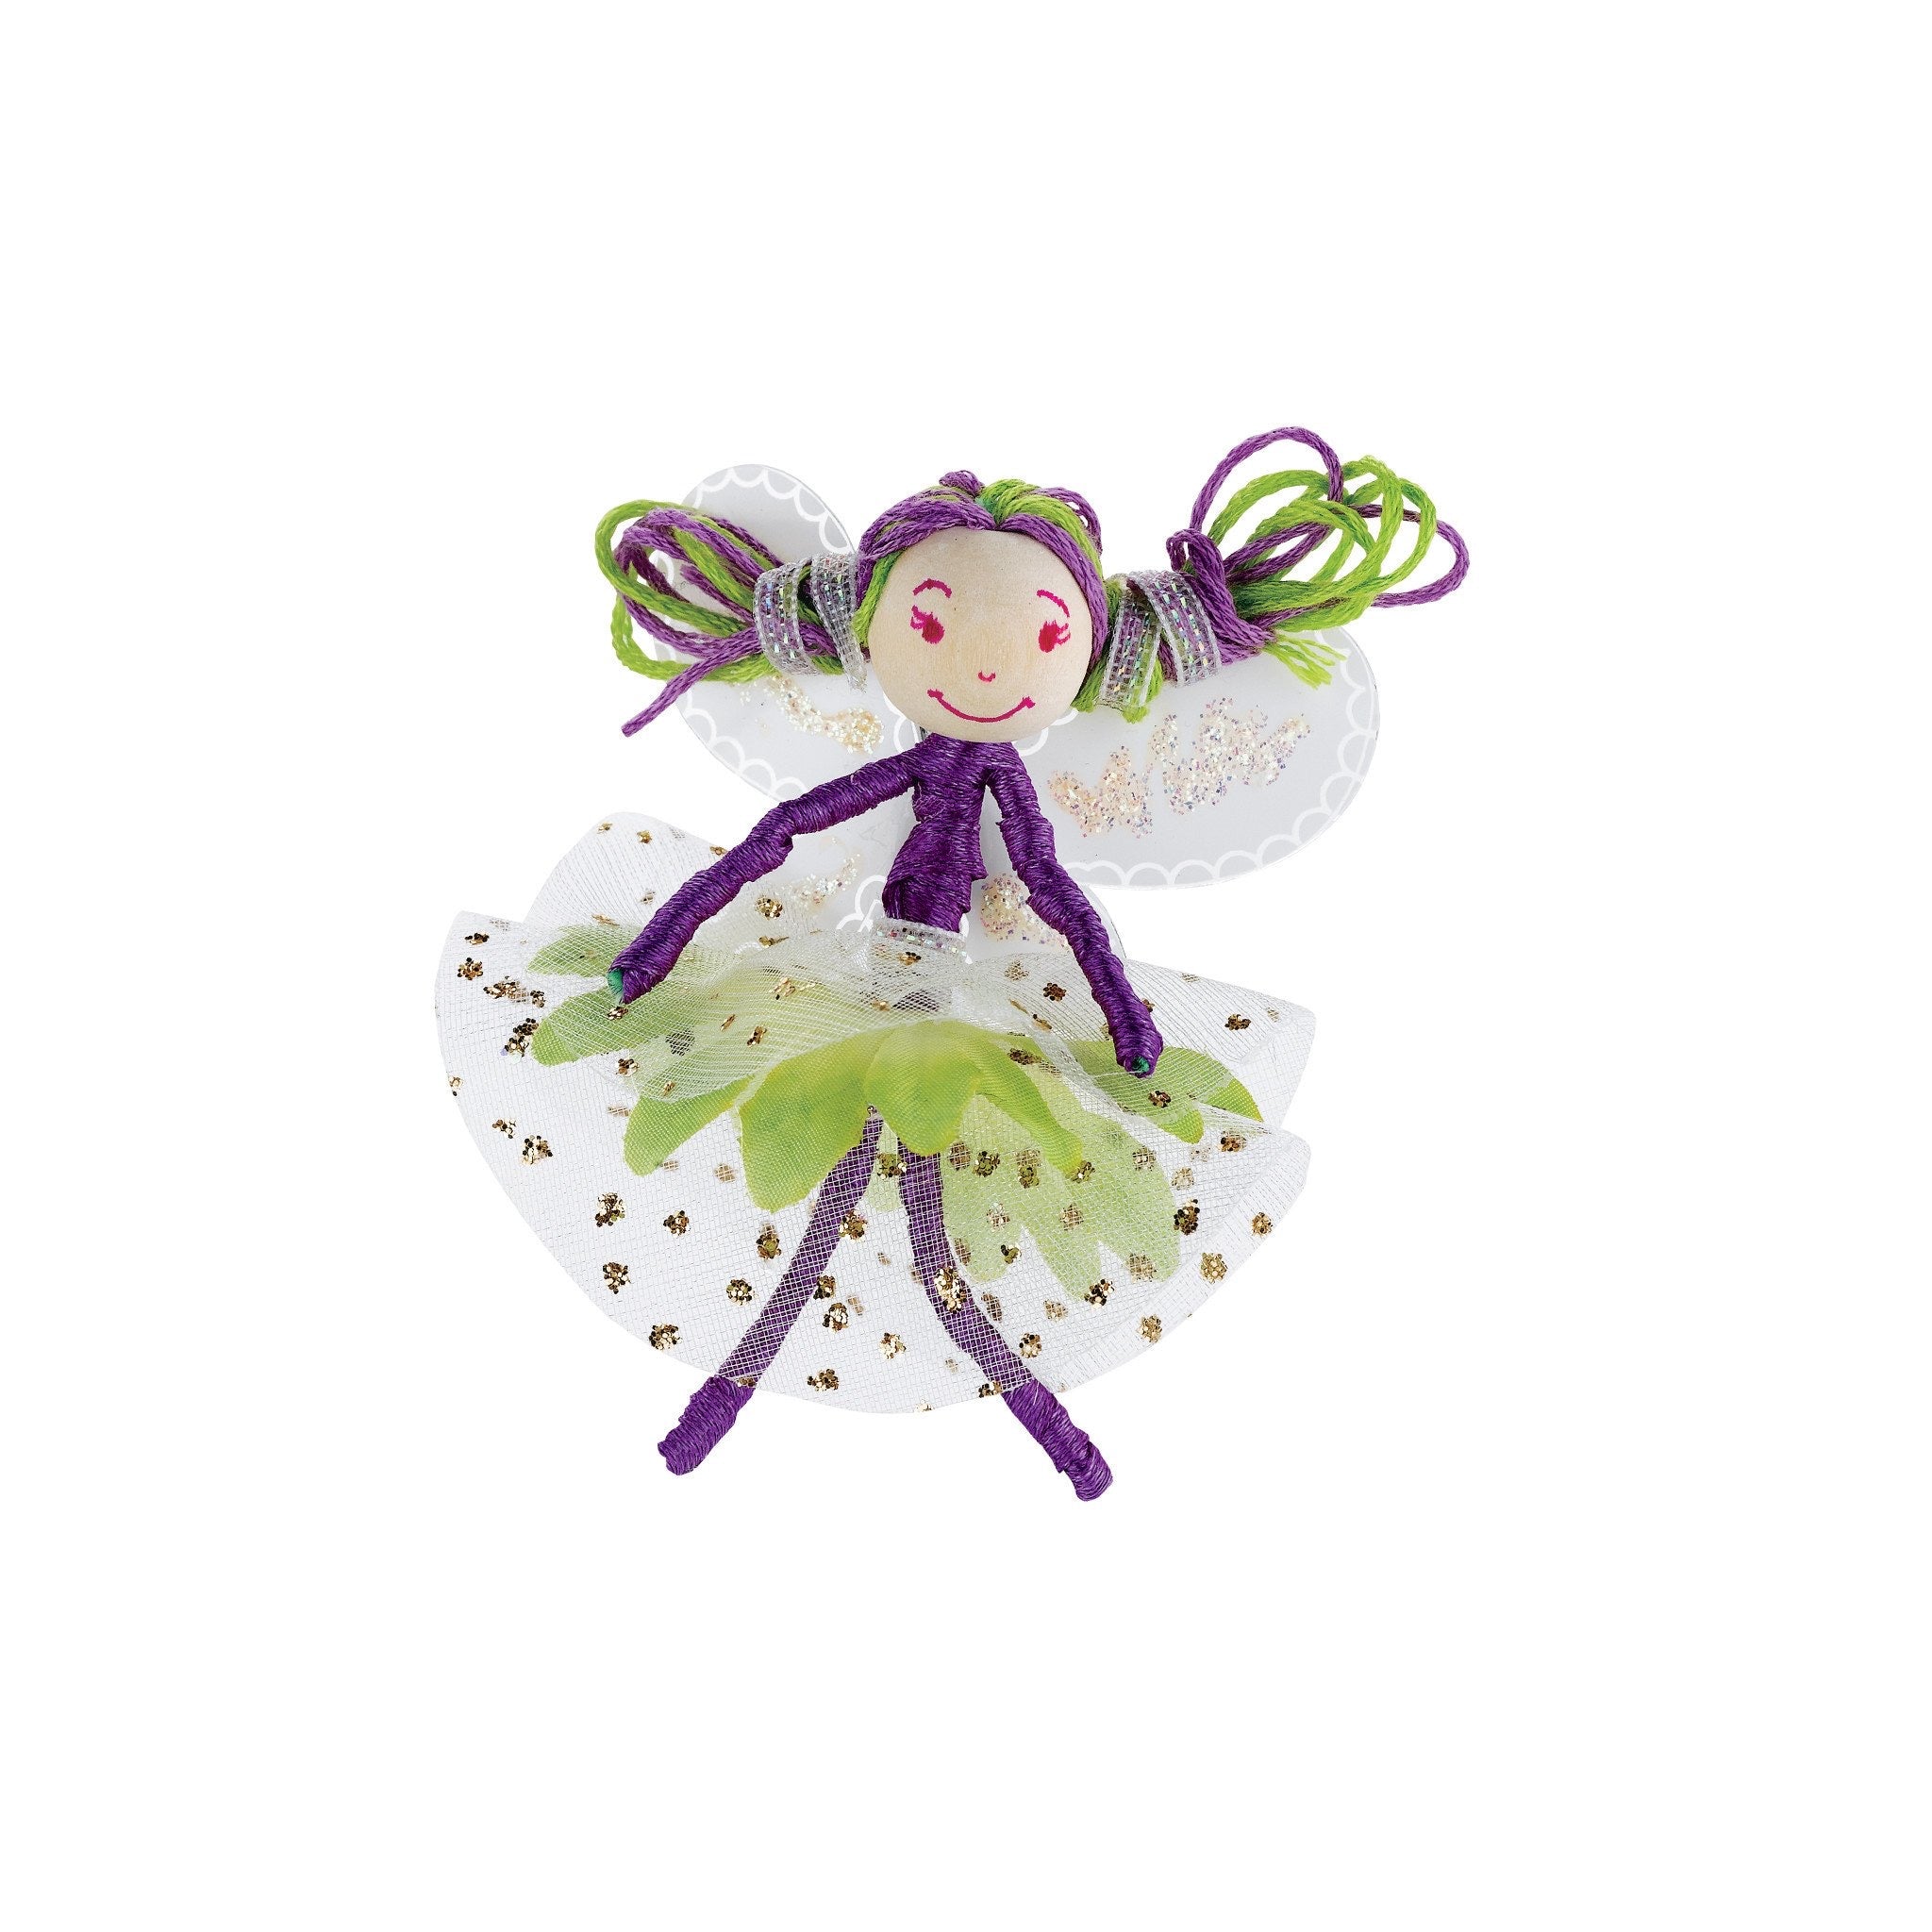 Sweet Fairies - Mini Kit    